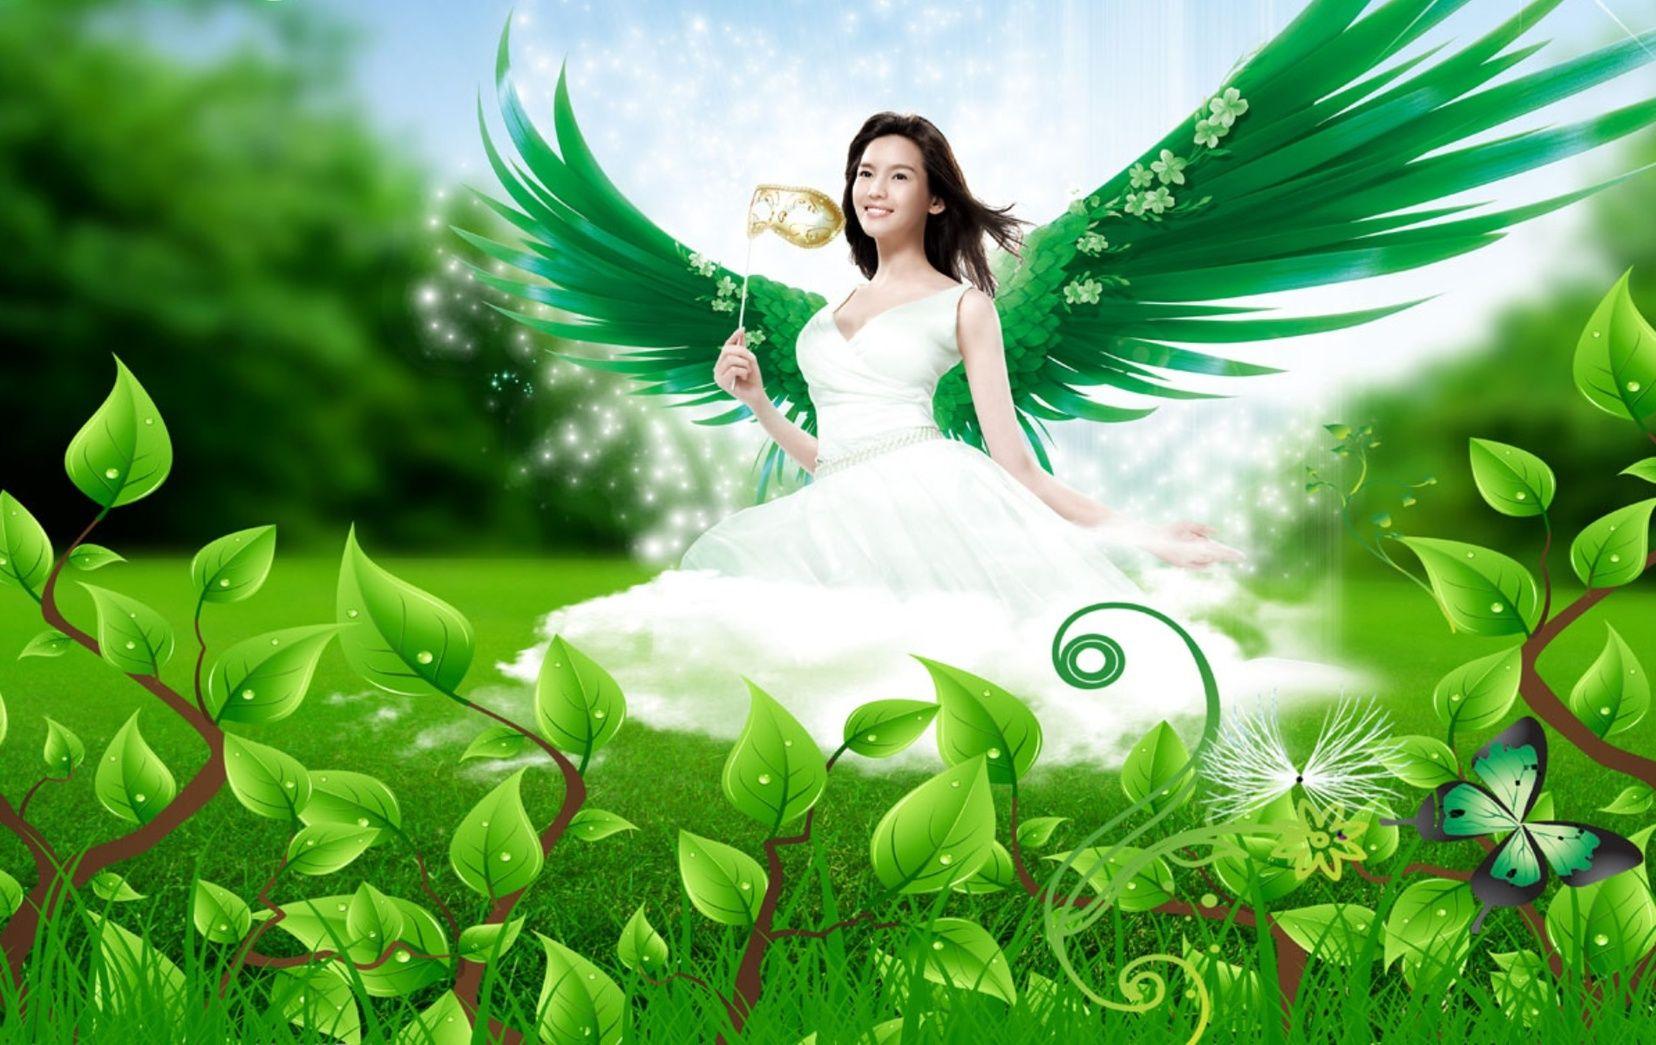 Beautiful Angel Girl Wallpapers - Top Free Beautiful Angel Girl ...